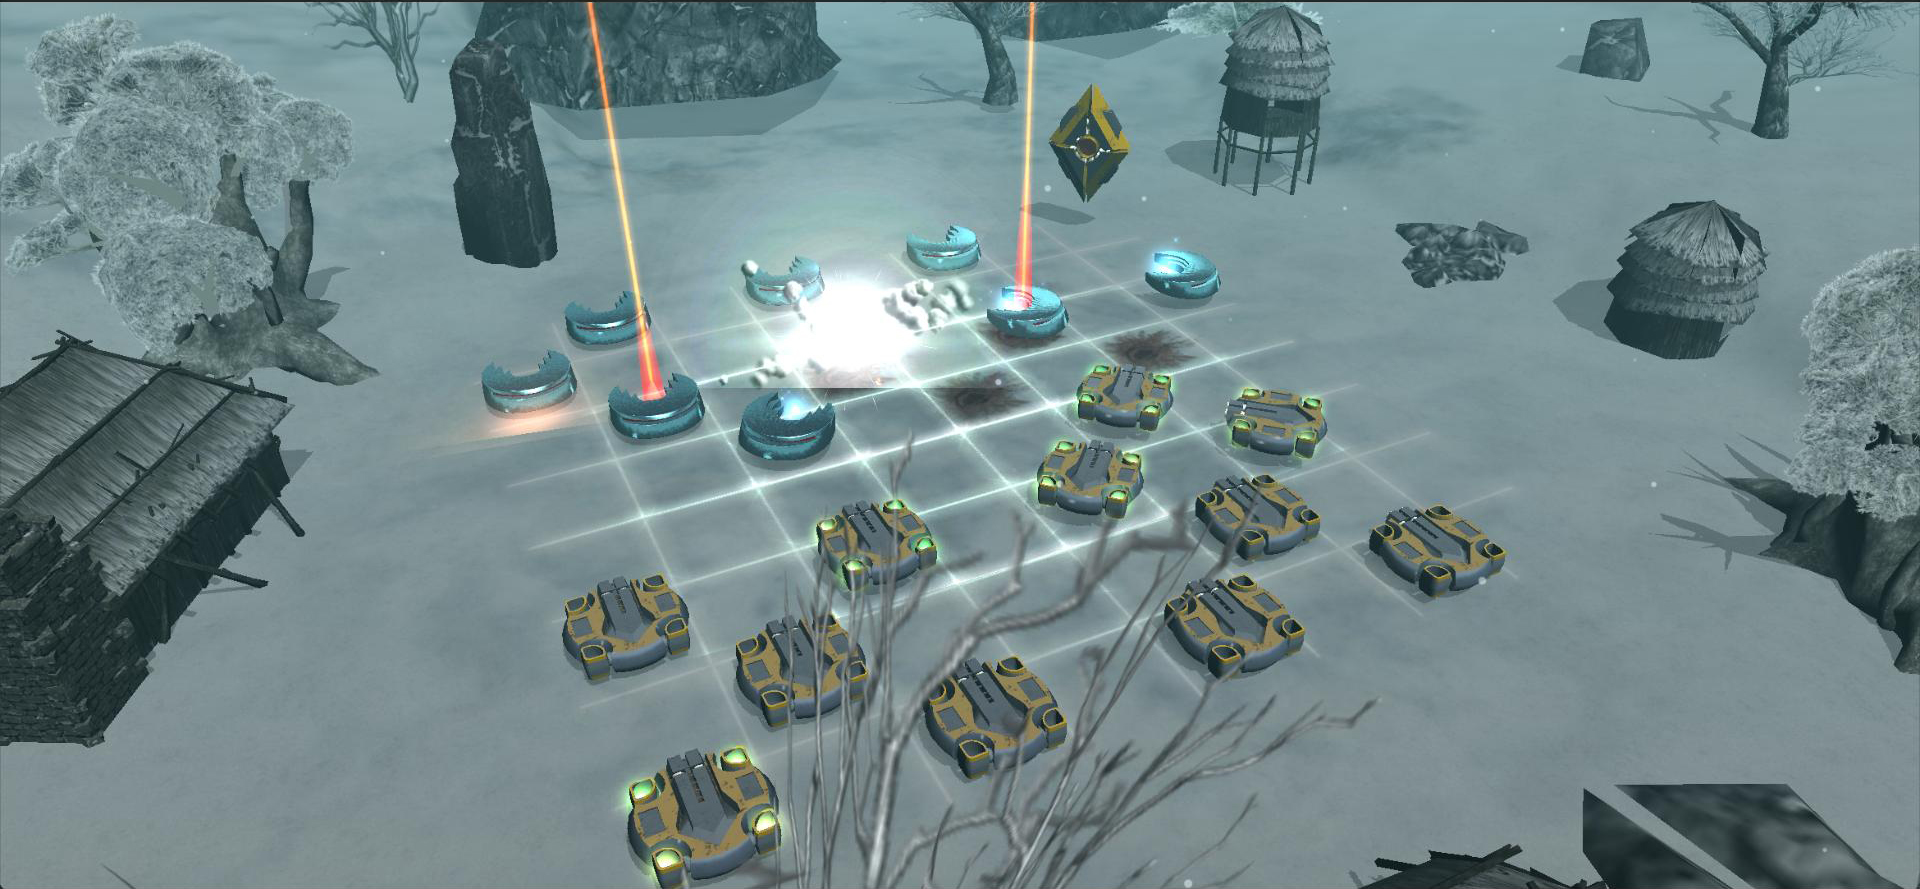 Скачать Battle Checkers: Infinity War: Android TBS игра на телефон и планшет.